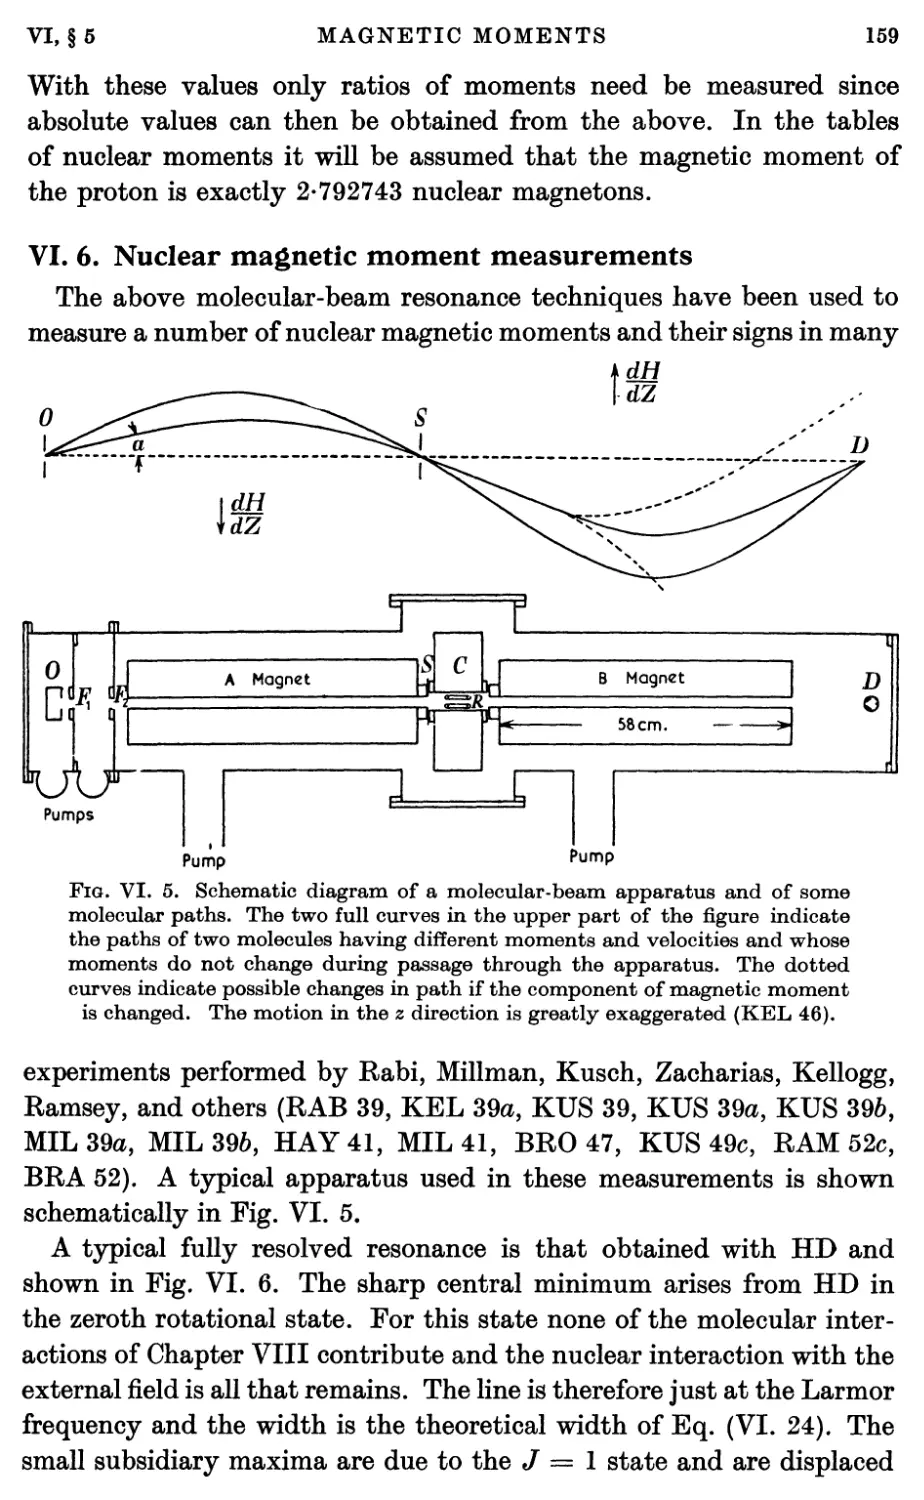 VI.6. Nuclear Magnetic Moment Measurements